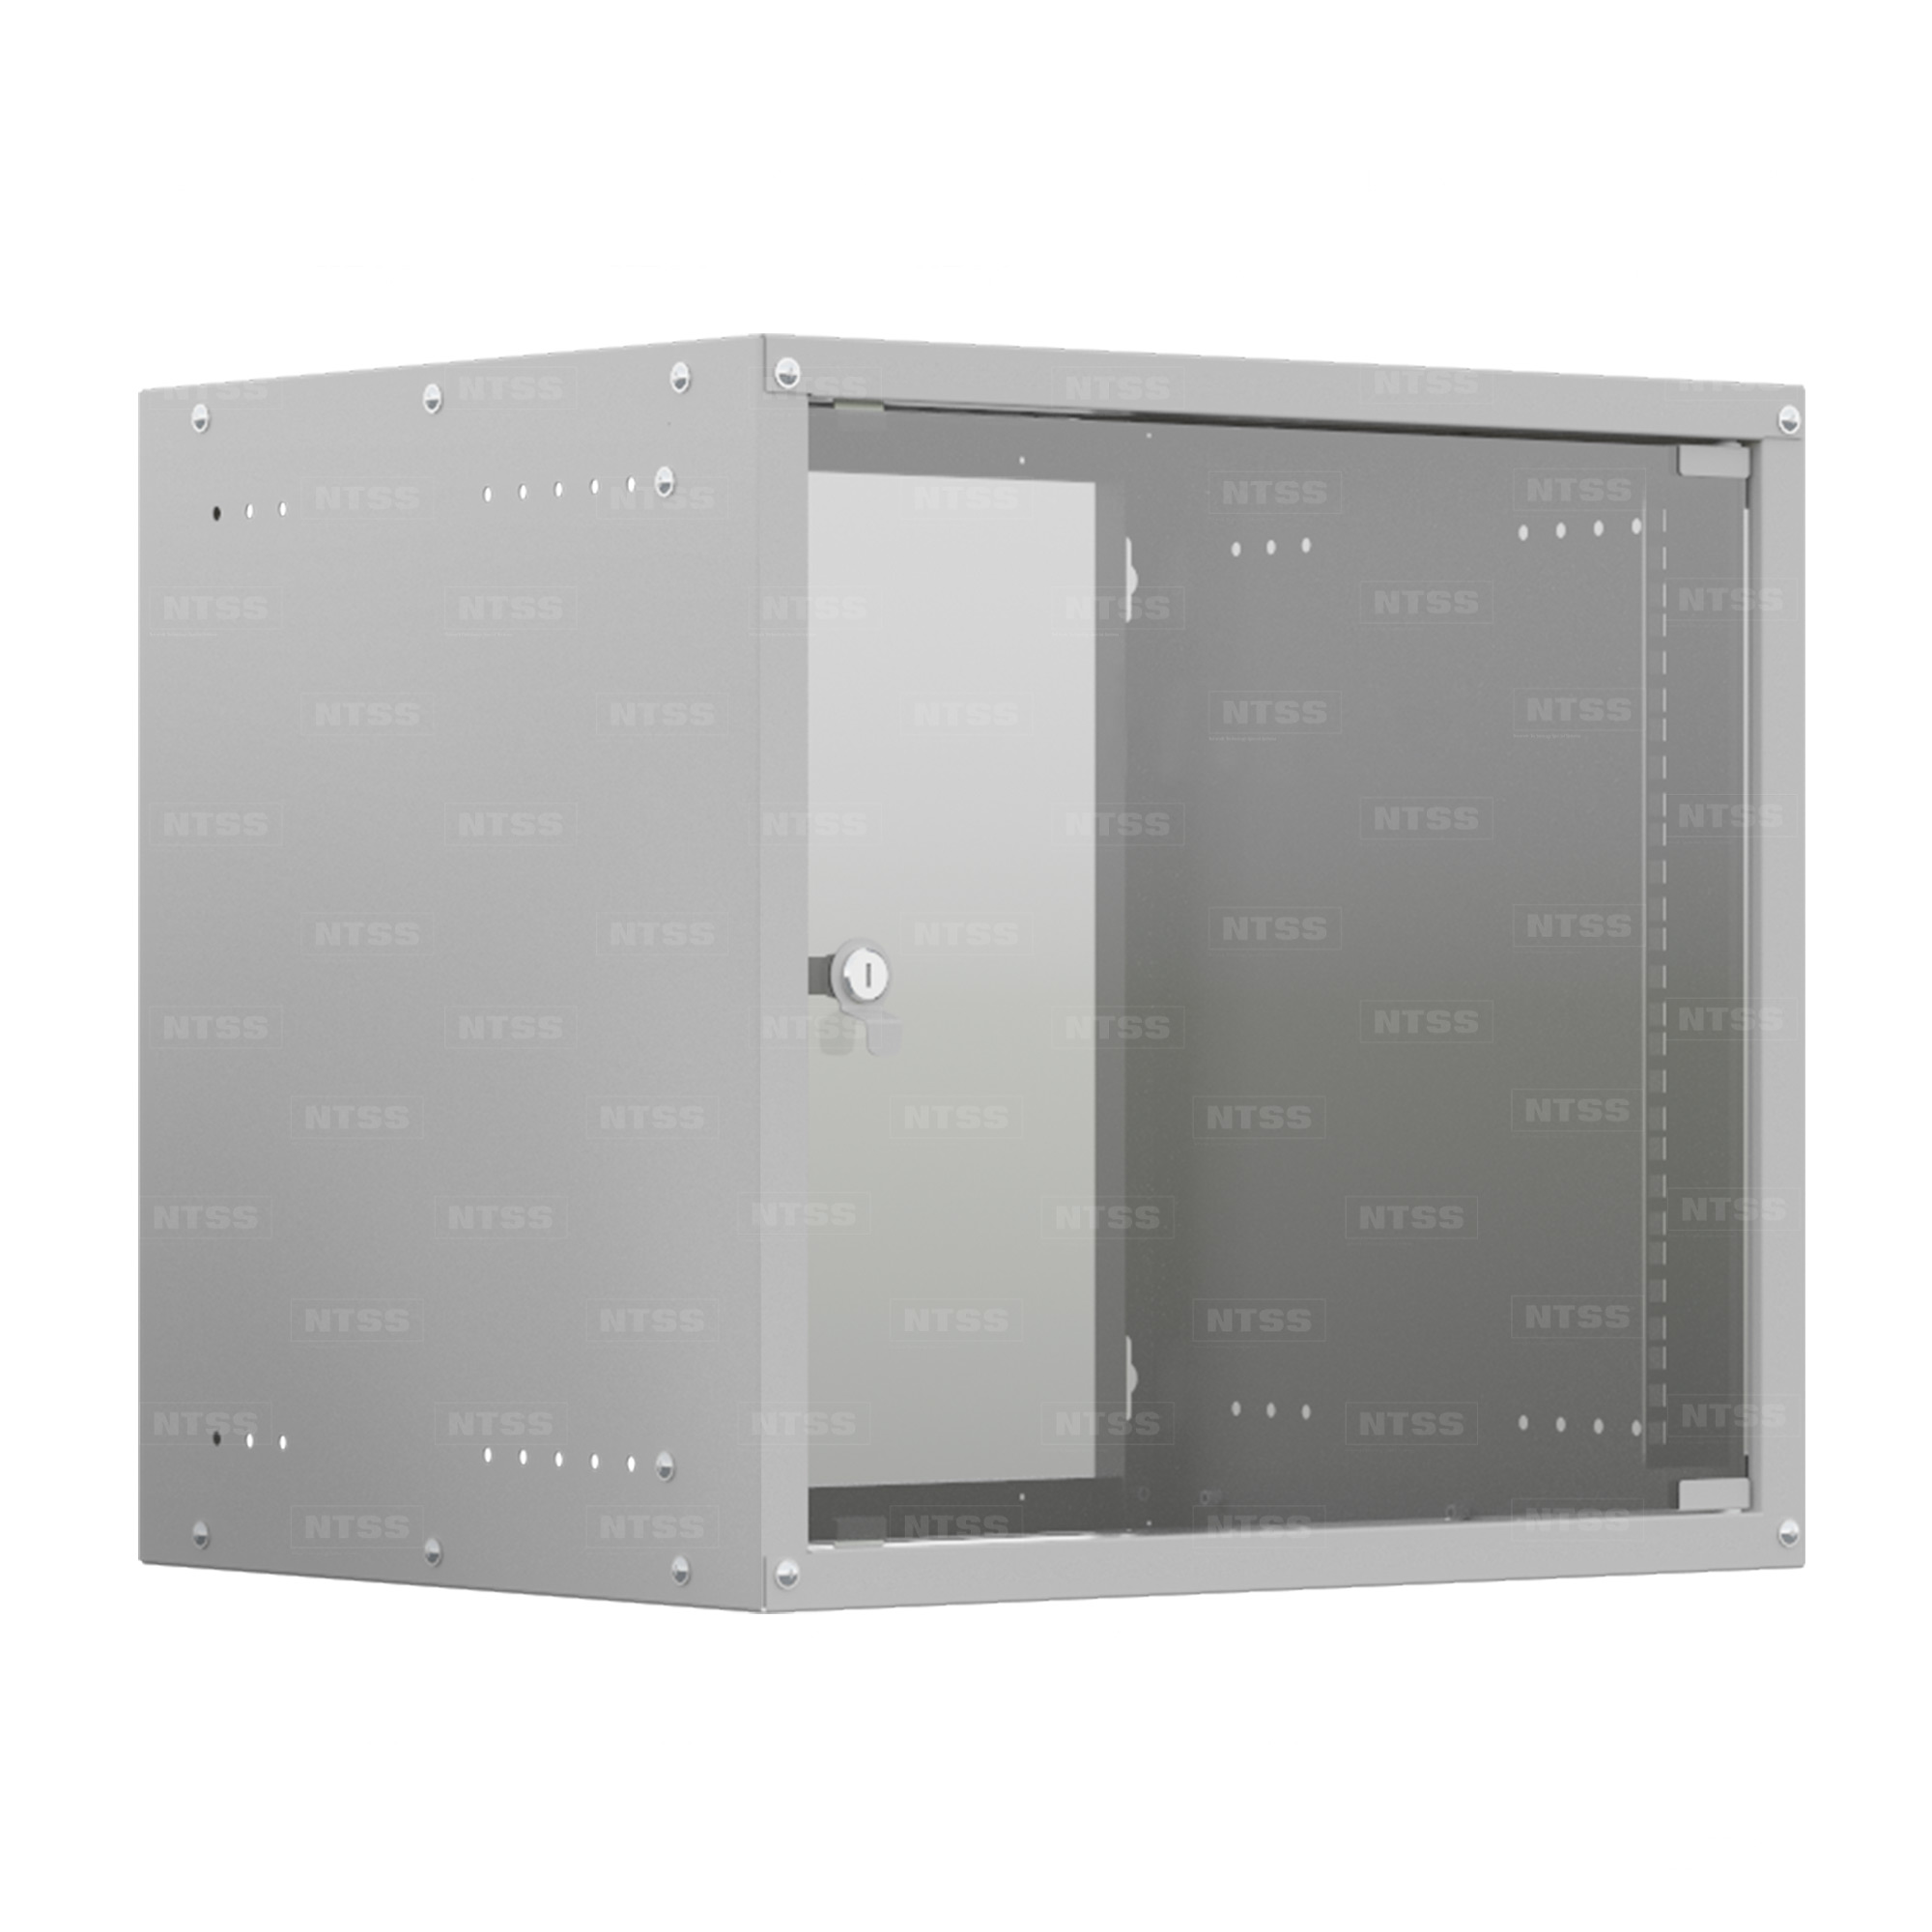 Шкаф телекоммуникационный настенный 15U 550x450 мм, стекло/металл, серый, разборный, NTSS LIME NTSS-WL15U5545GS (NTSS-WL15U5545GS)